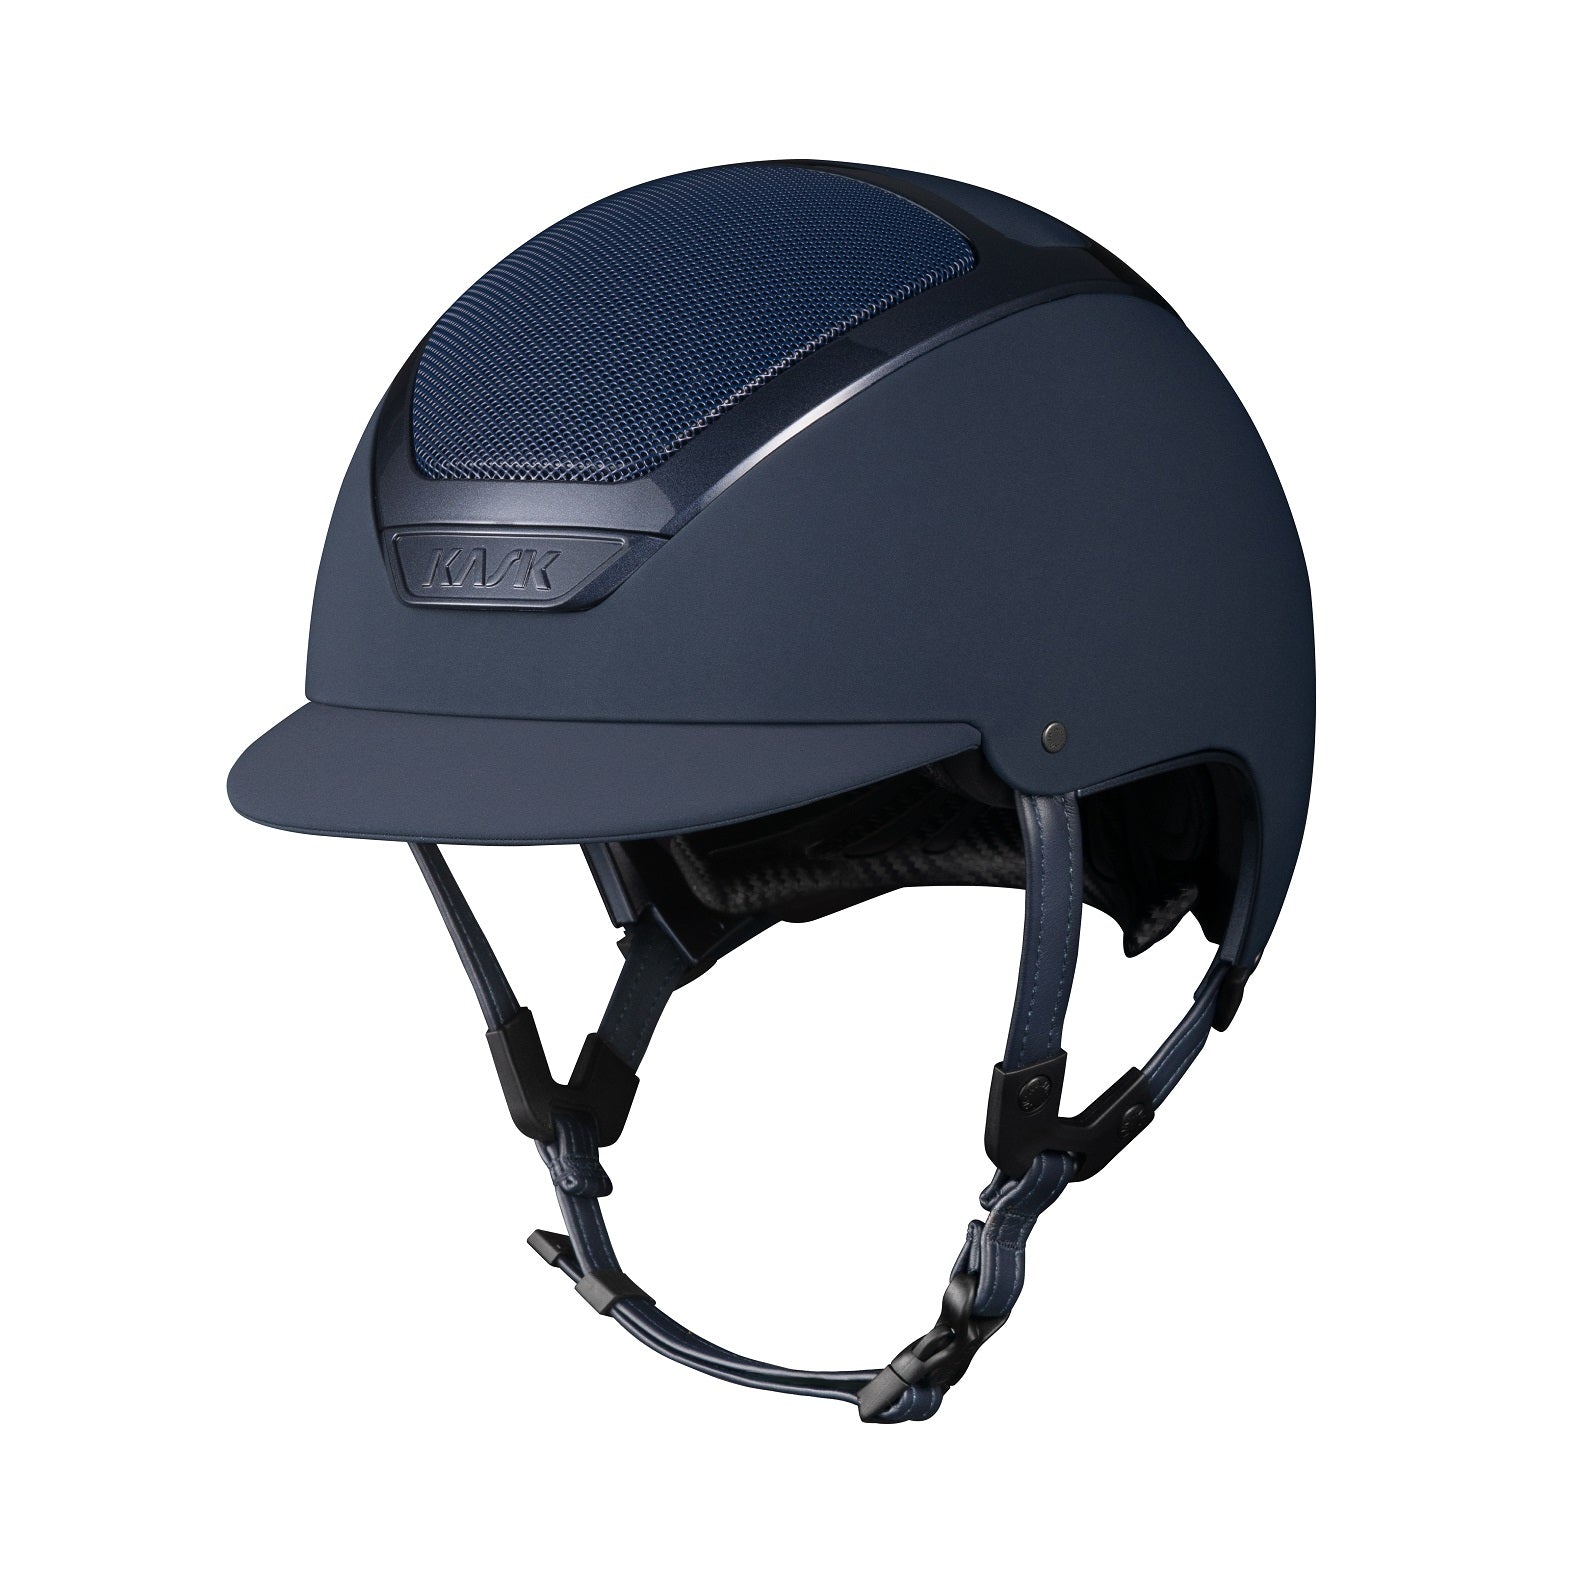 Kask Dogma Chrome Light Helmet